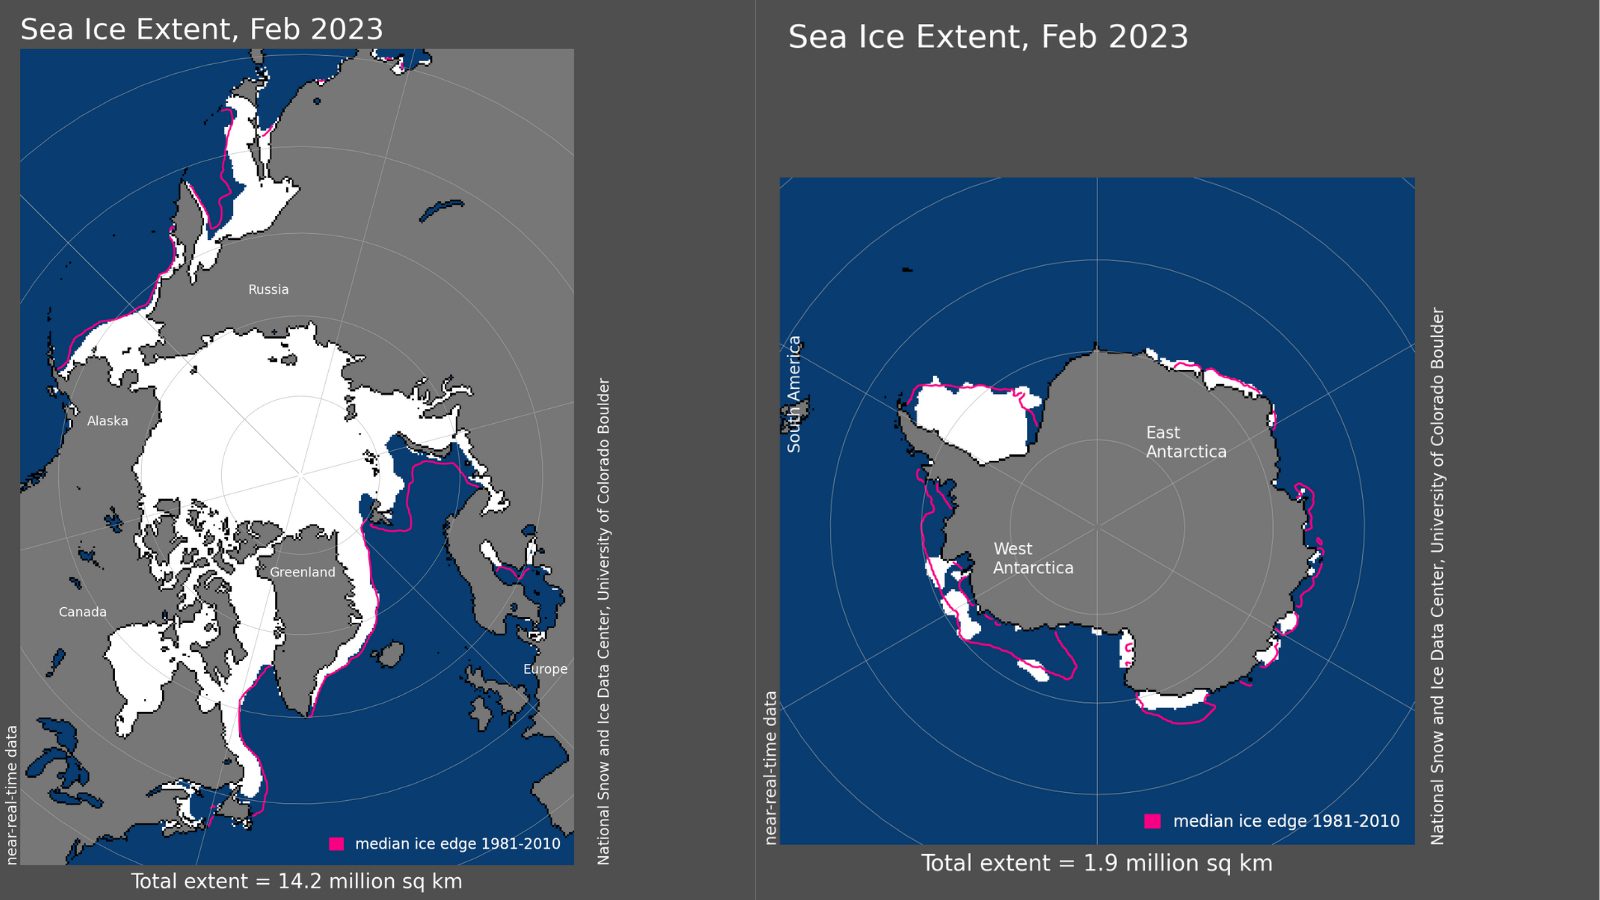 Left: February 2023 Arctic sea ice coverage; Right: February 2023 Antarctic sea ice coverage.